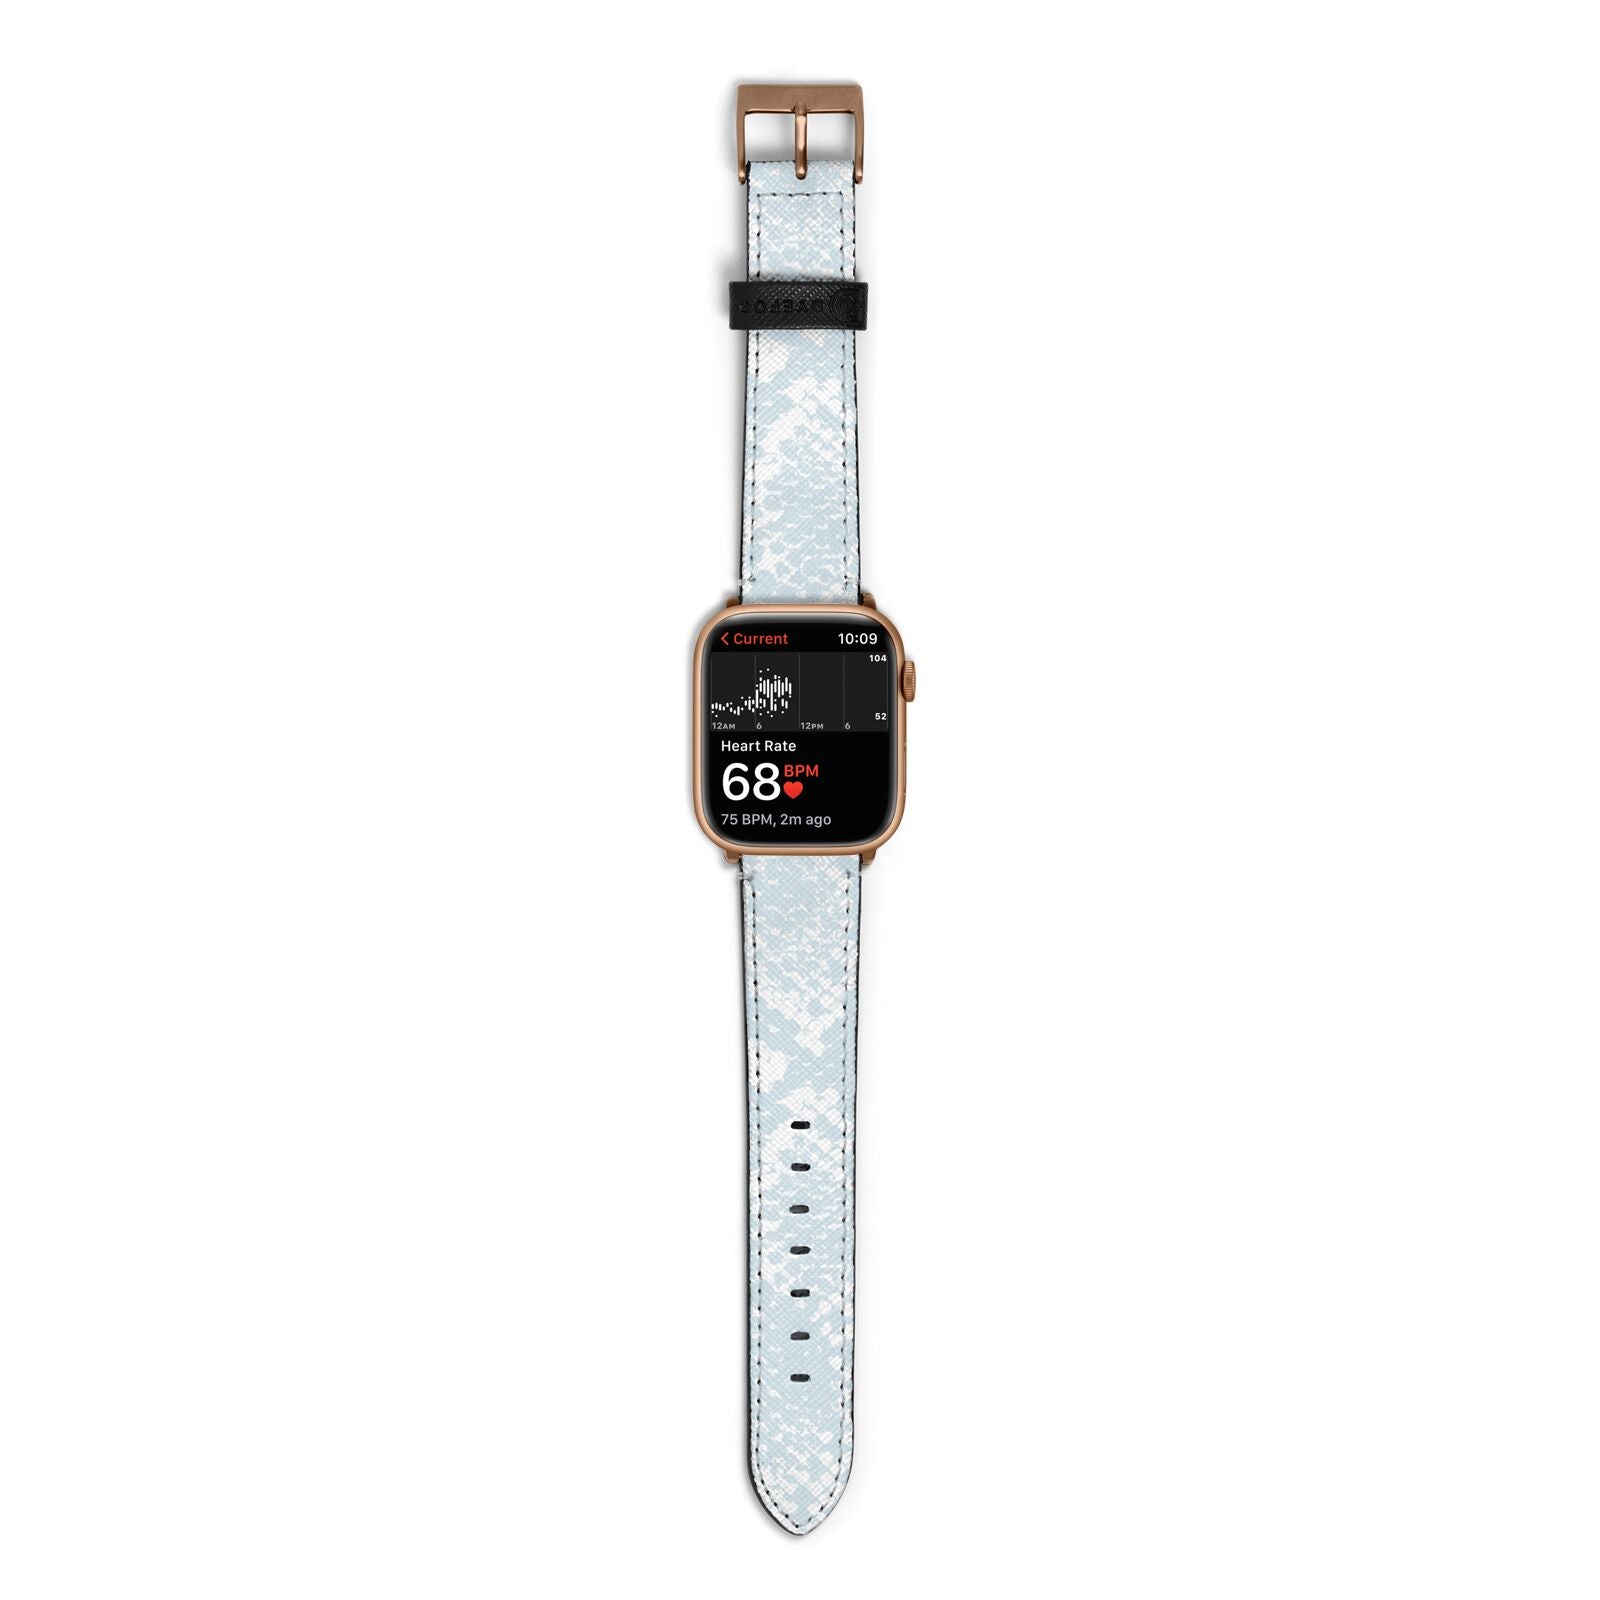 Sky Blue Snakeskin Apple Watch Strap Size 38mm with Gold Hardware